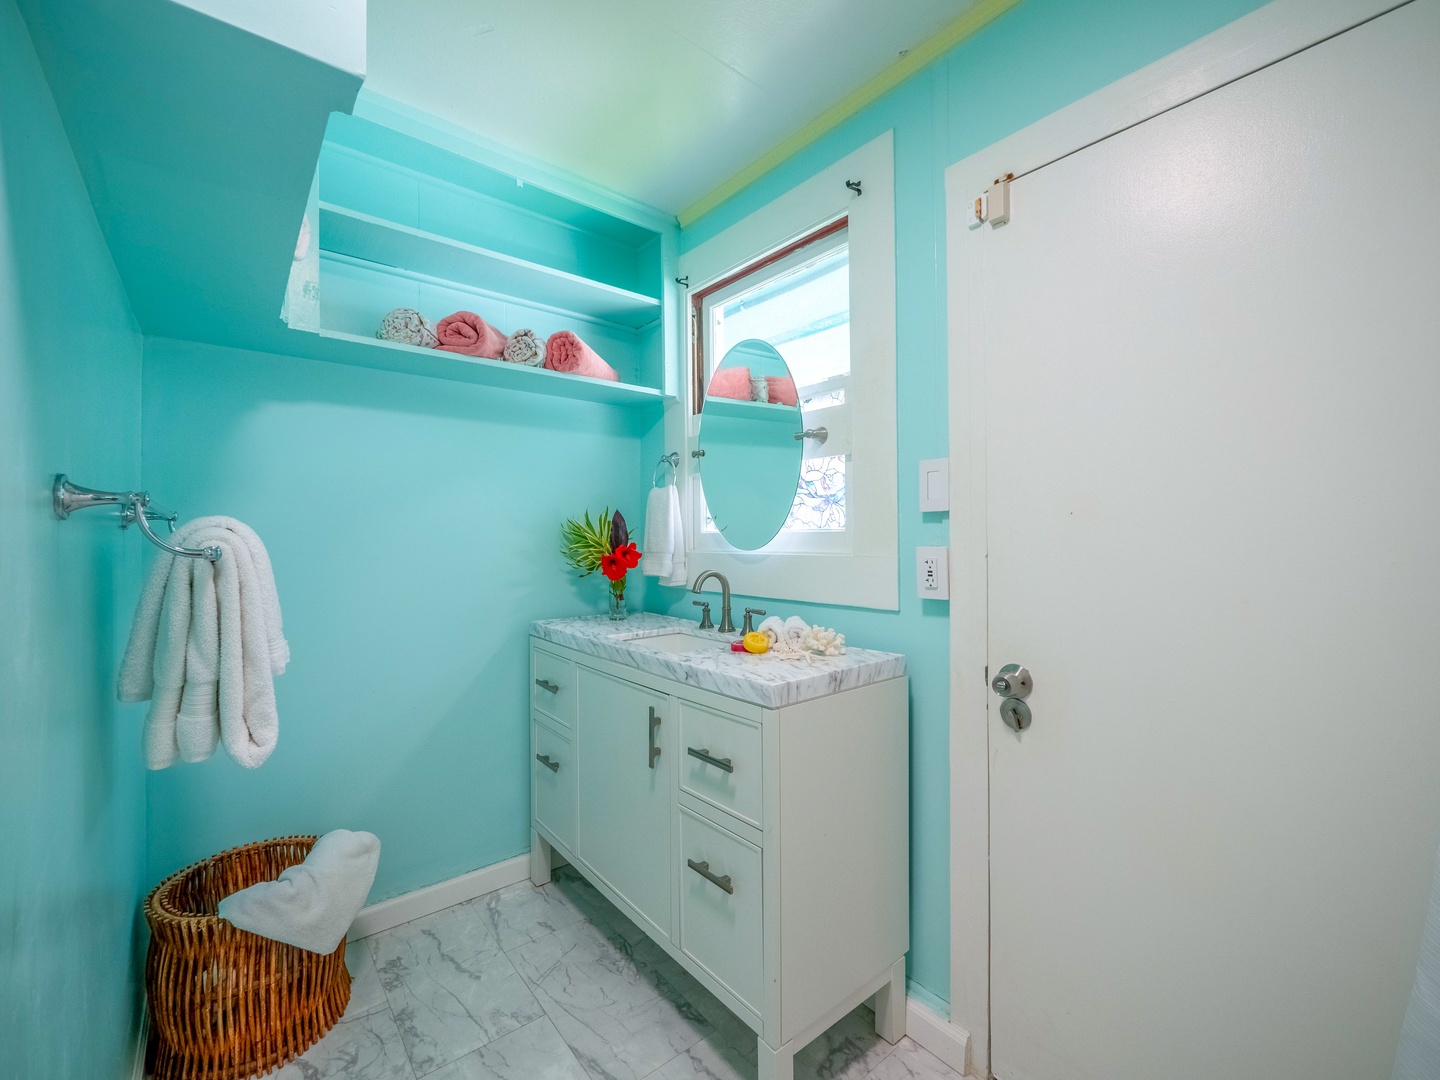 Hauula Vacation Rentals, Paradise Reef Retreat - Ensuite bathroom with a nice vanity space